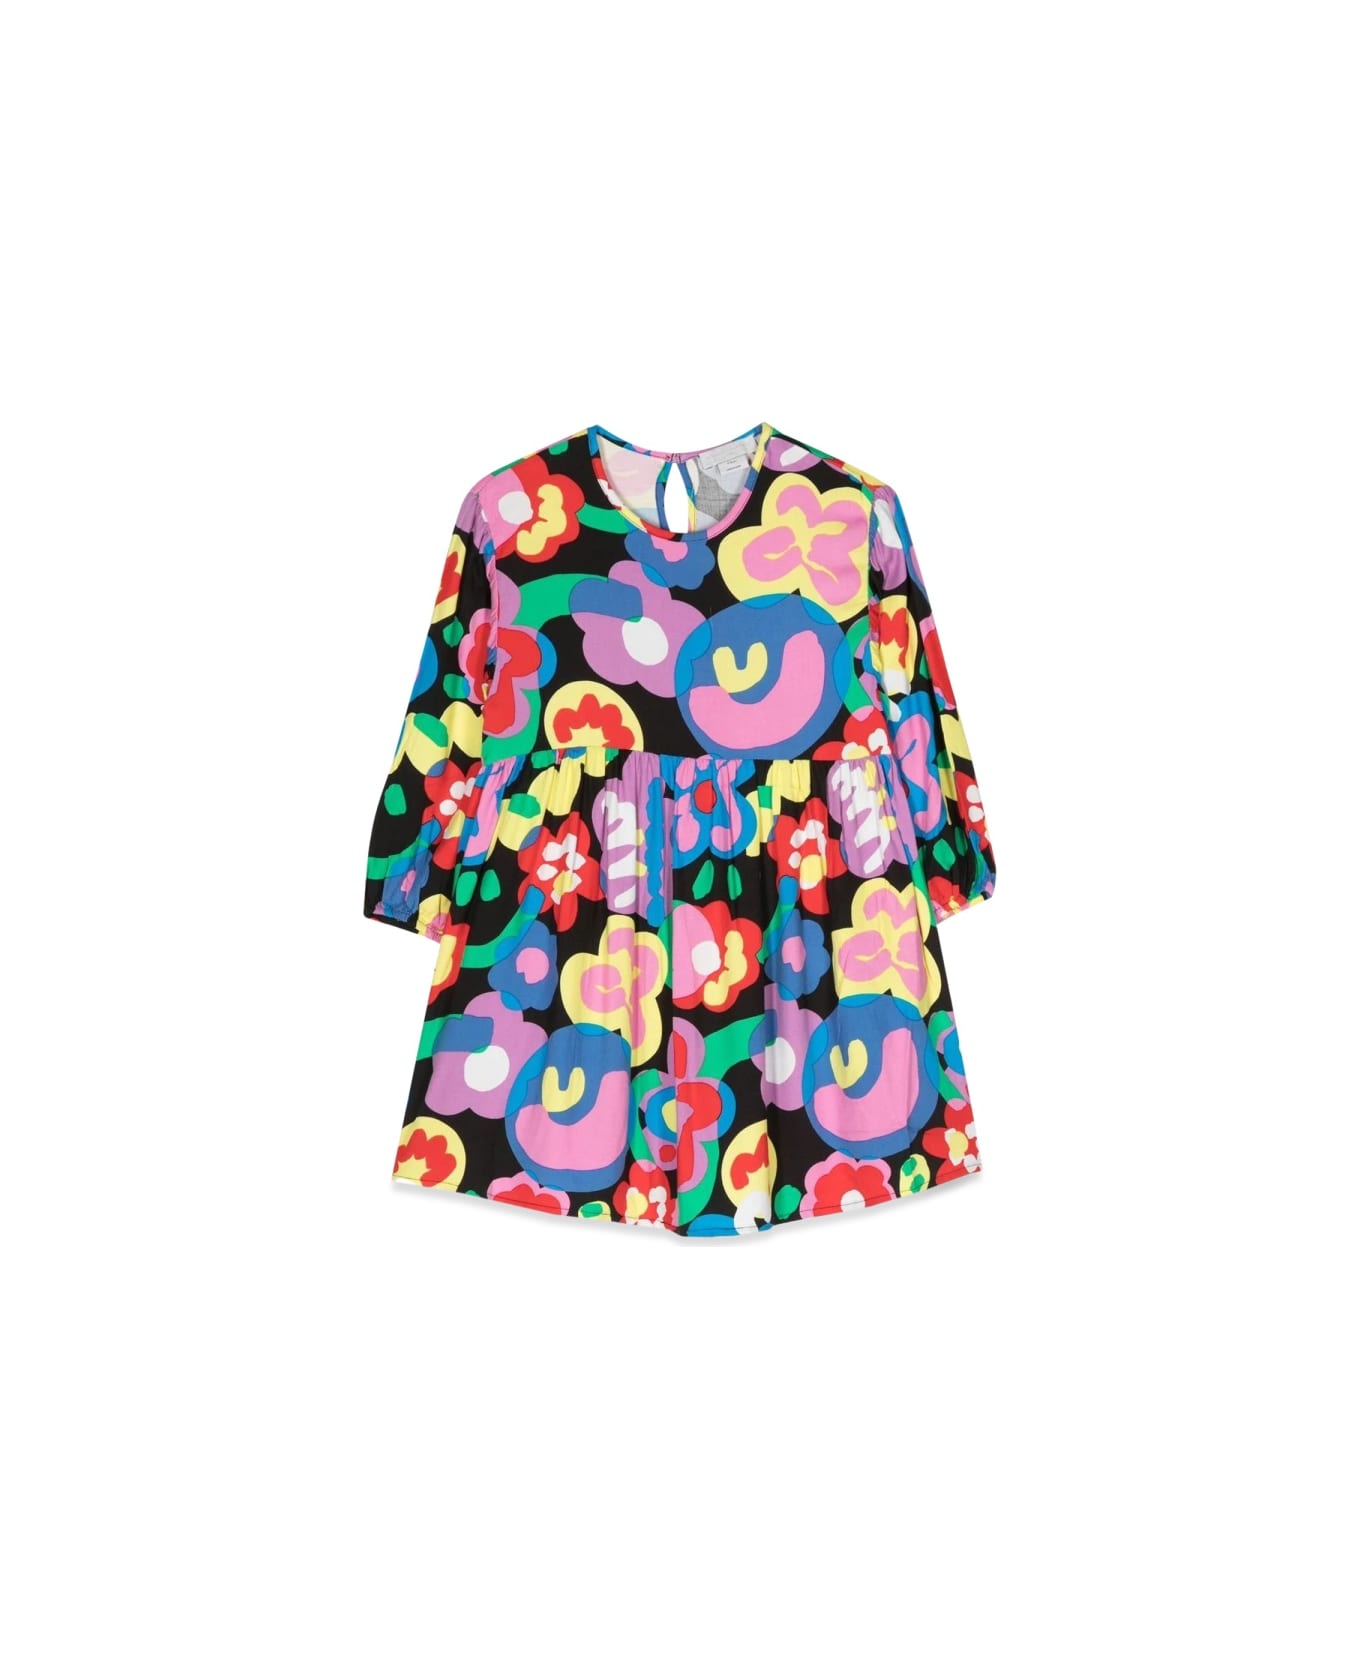 Stella McCartney Kids M/l Patterned Dress - MULTICOLOUR